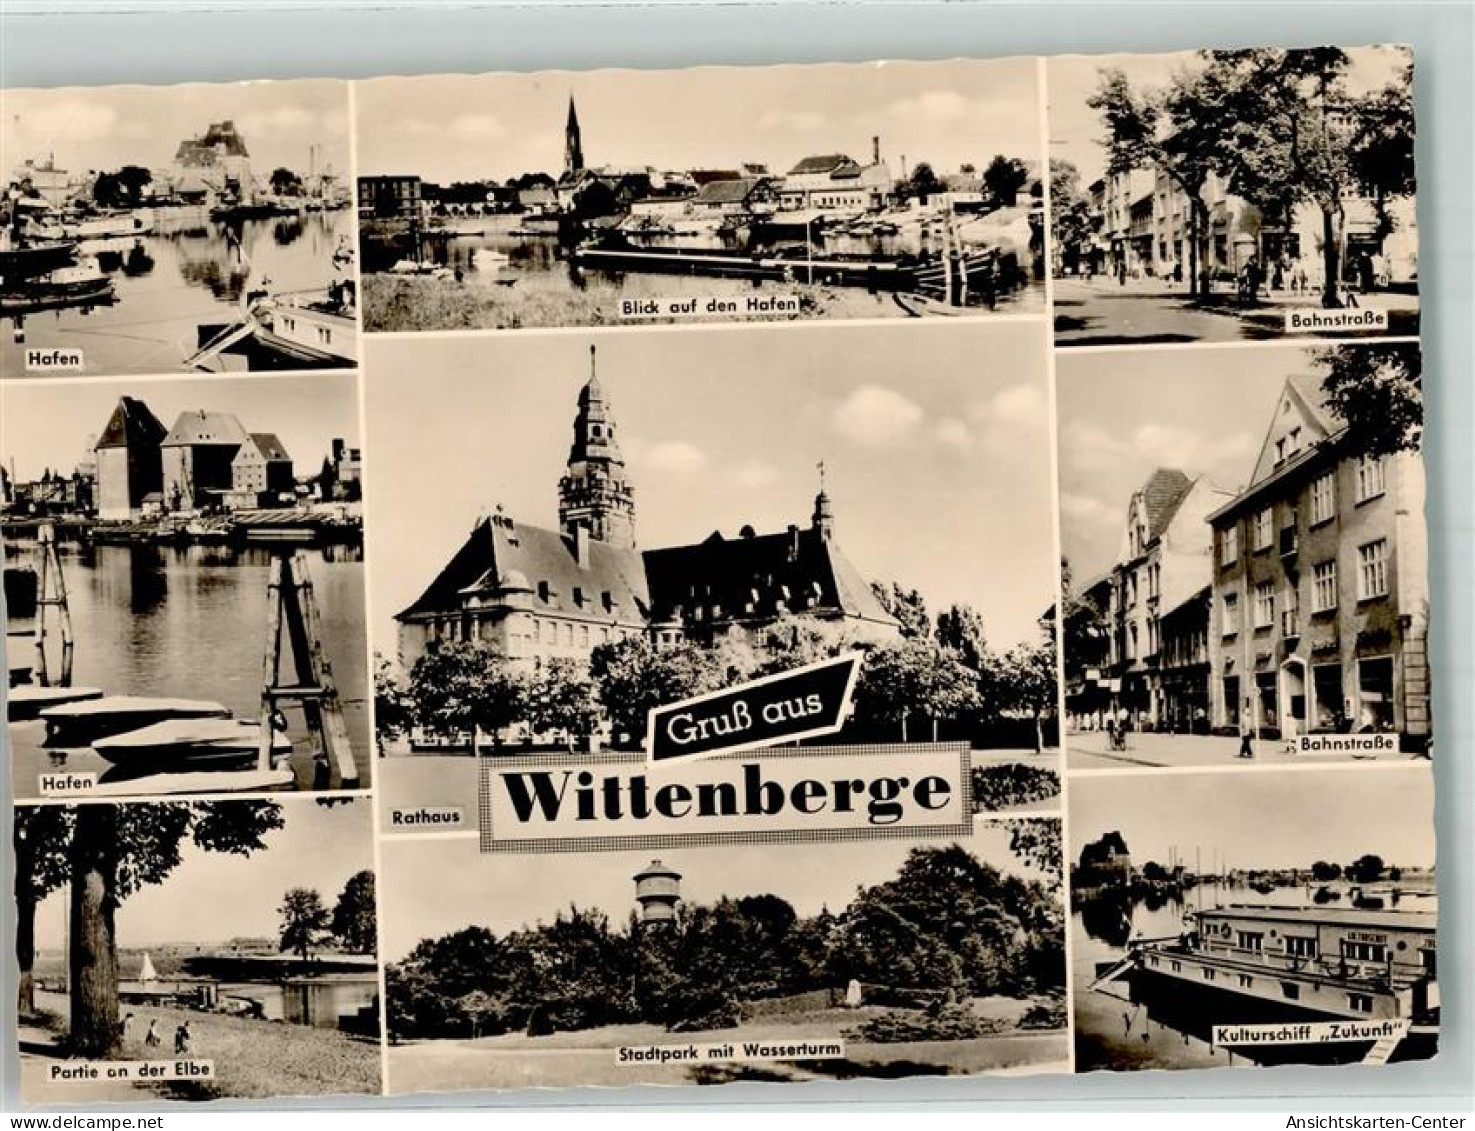 39819511 - Wittenberge , Prignitz - Wittenberge